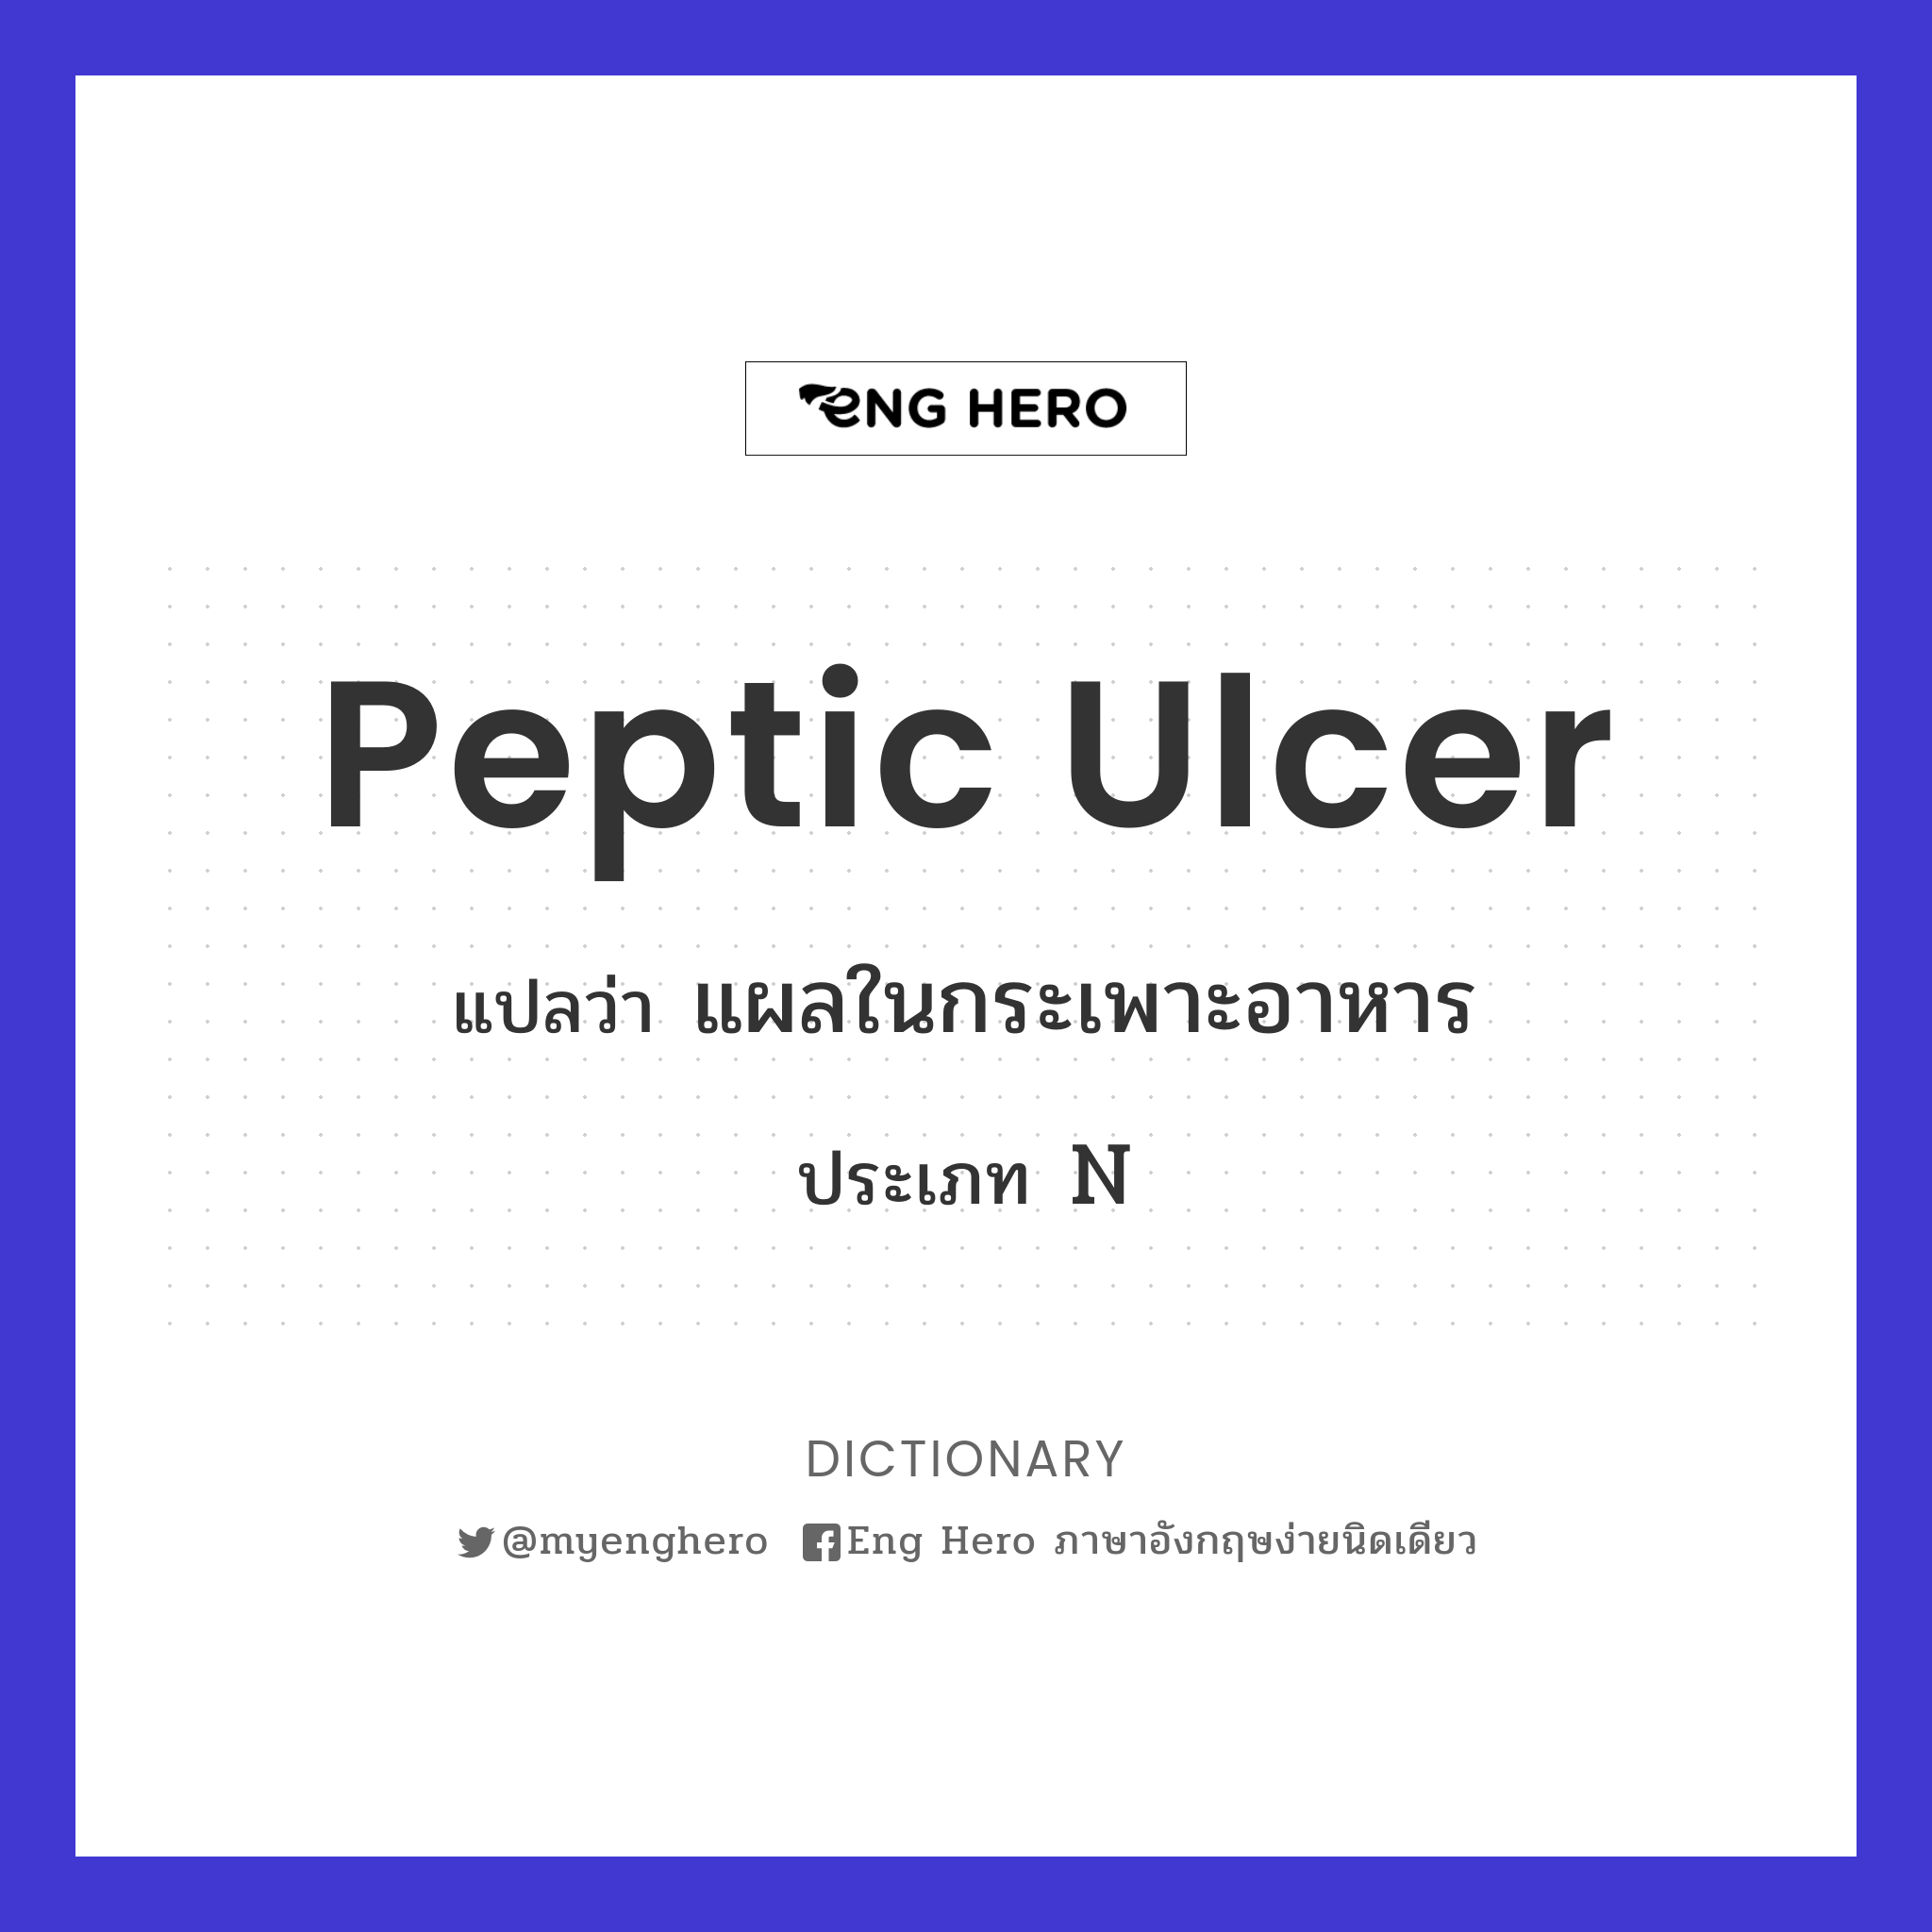 peptic ulcer